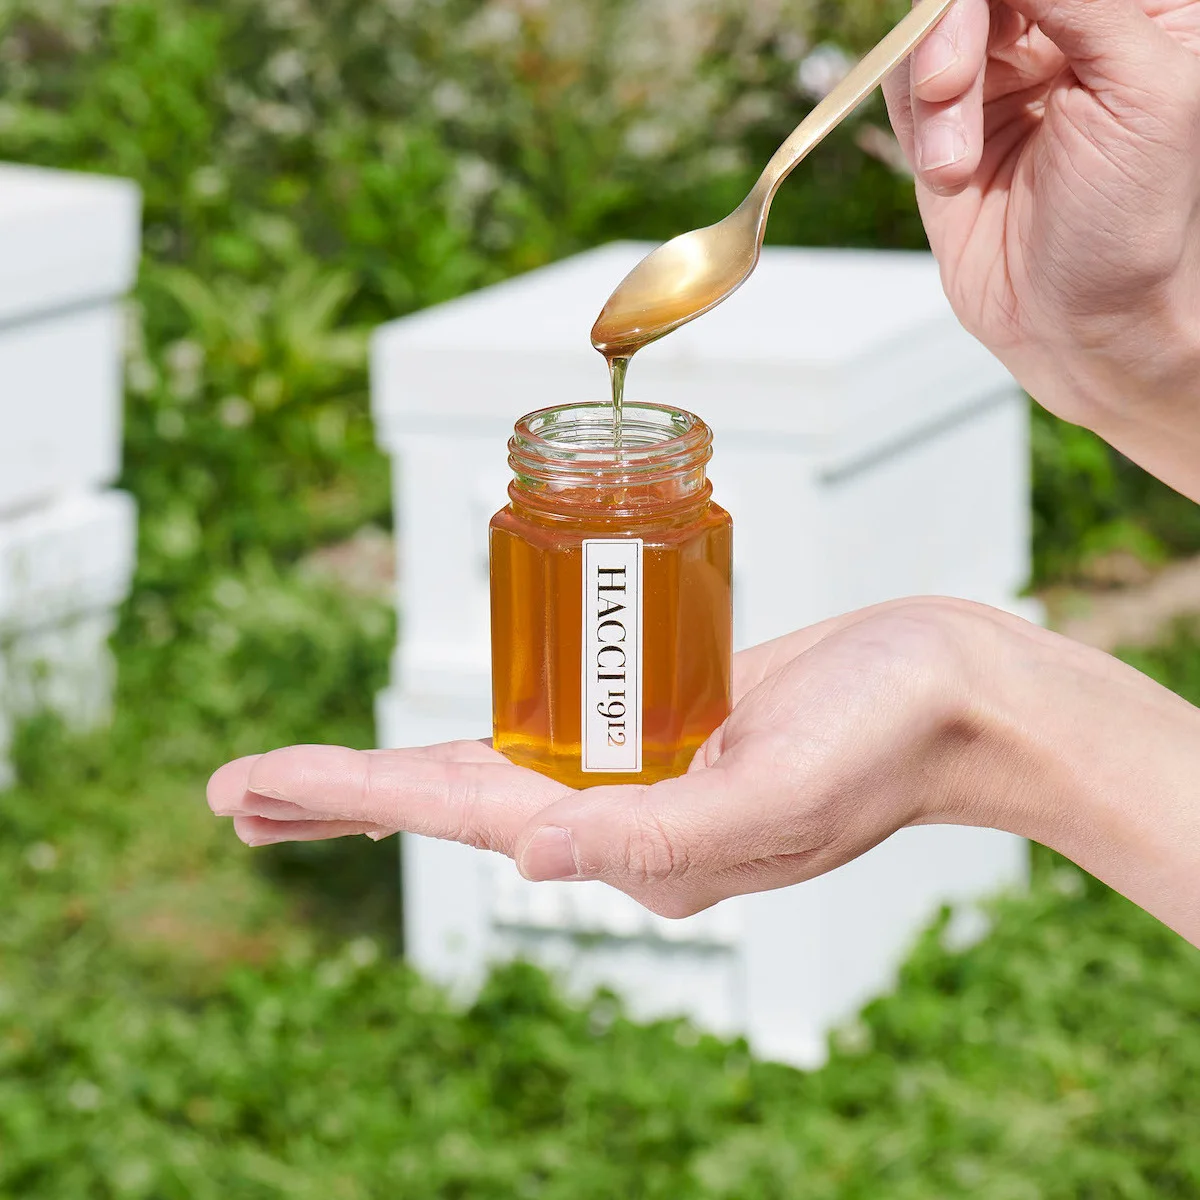 【HACCI】「ミツバチの楽園」を伊勢神宮のほとりにオープン。ミツバチ・自然・人の幸せが連鎖する場所へ